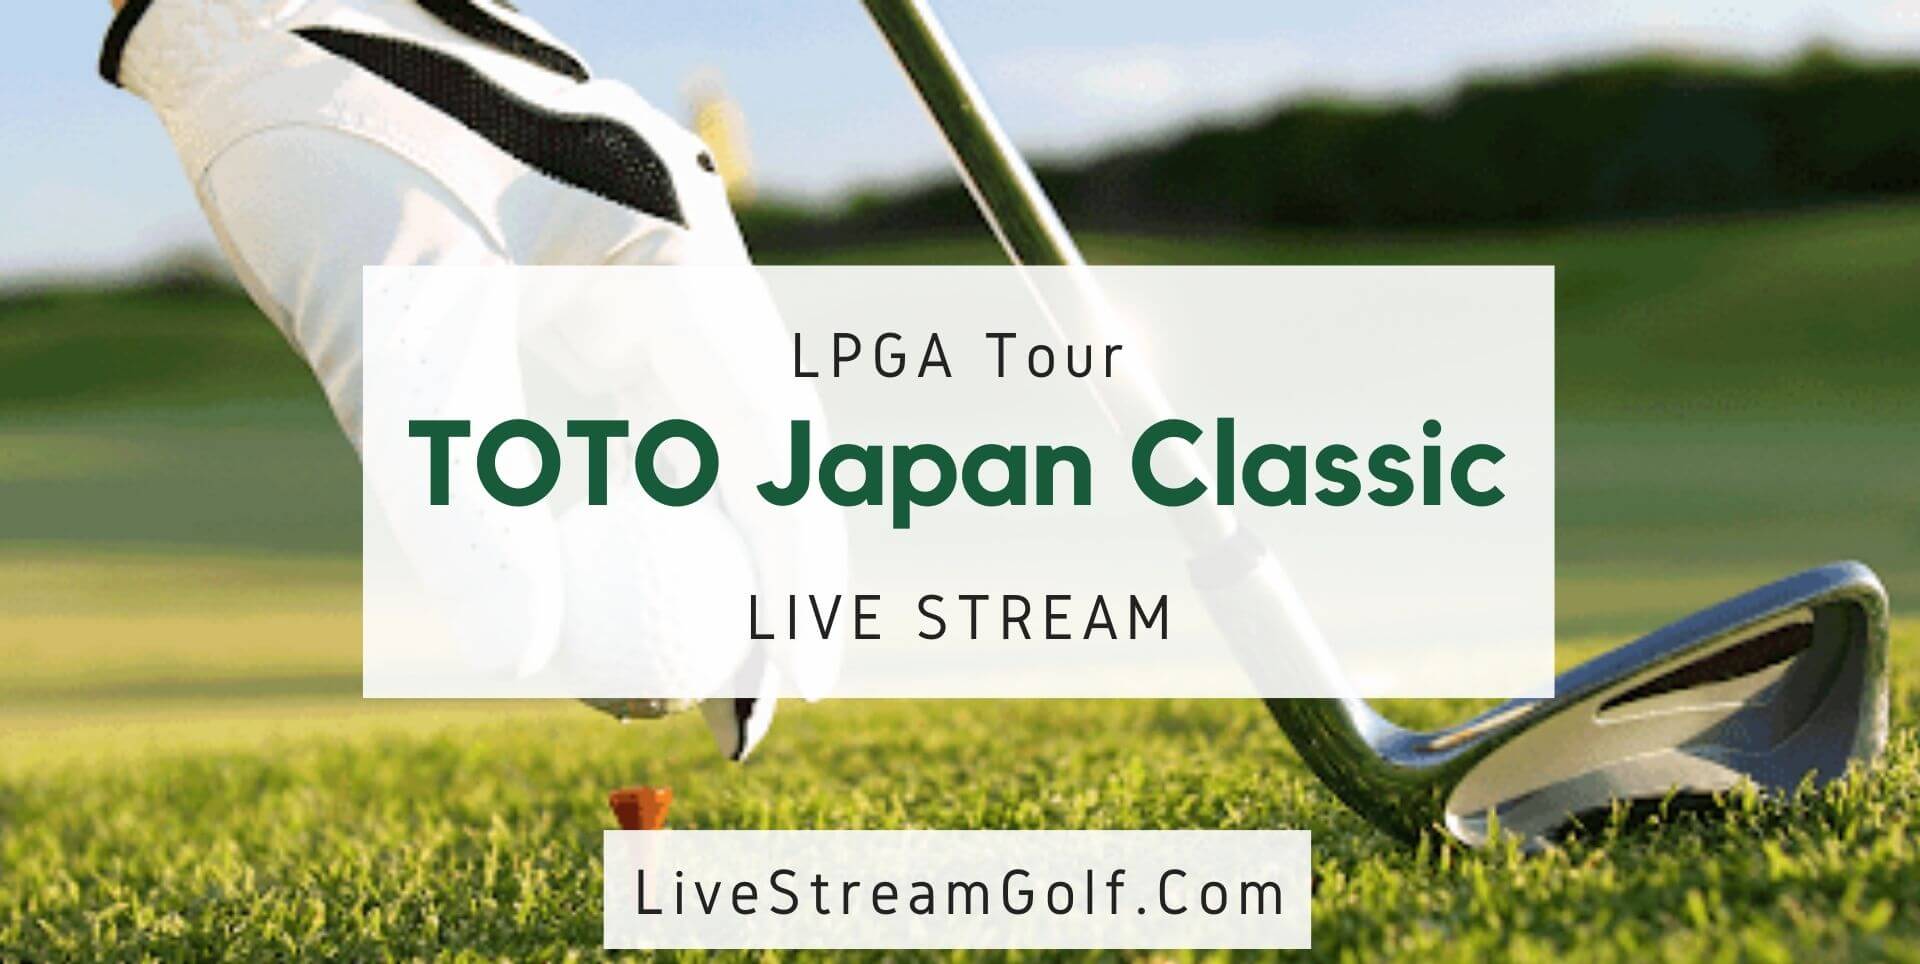 TOTO Japan Classic Day 1 Live Stream: LPGA Tour 2022